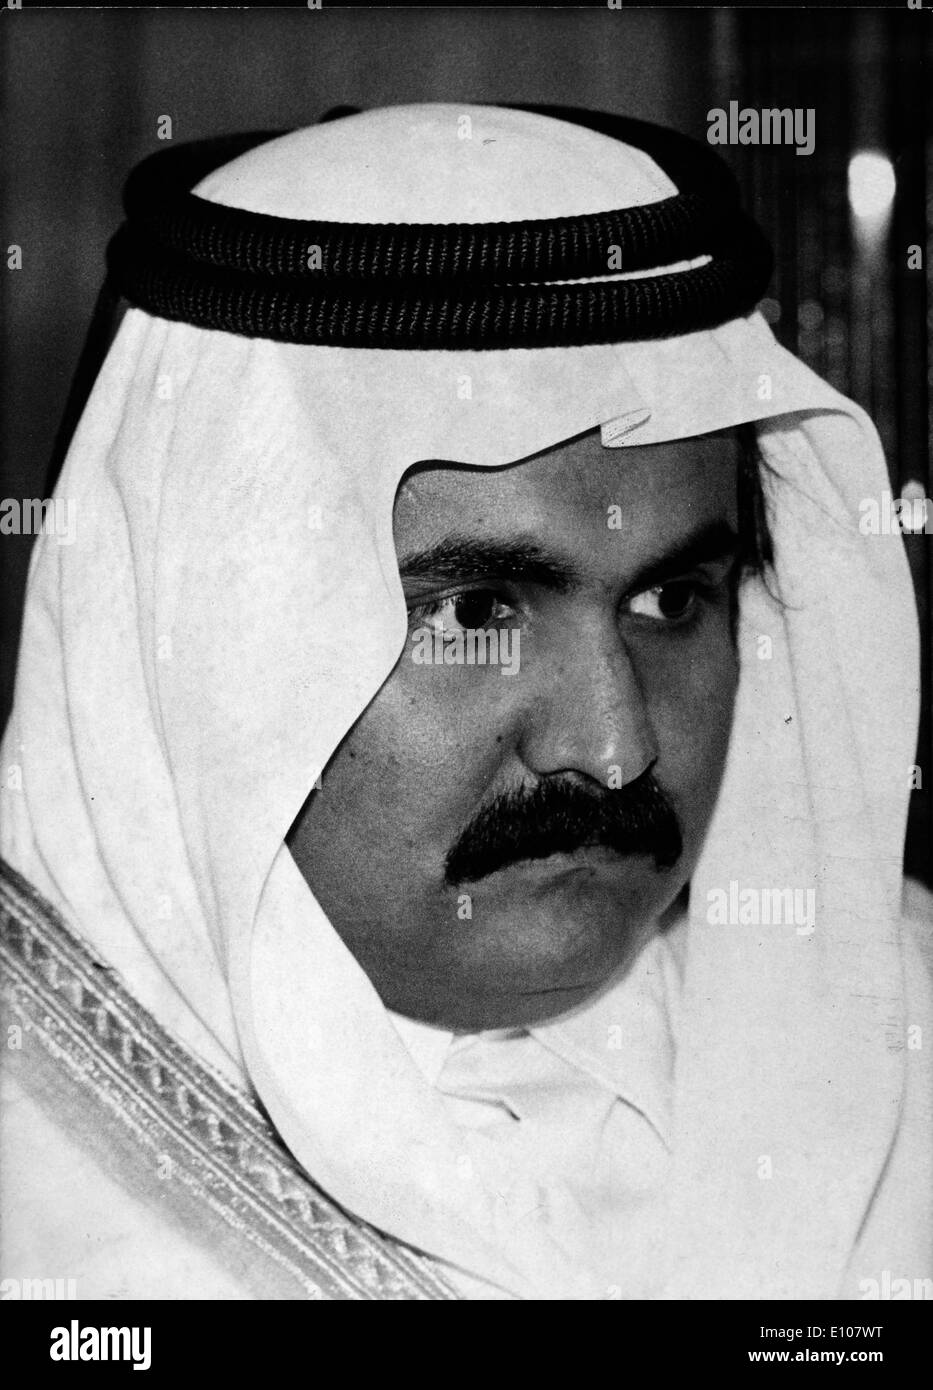 Hamad Bin Khalifa Al Thani Young